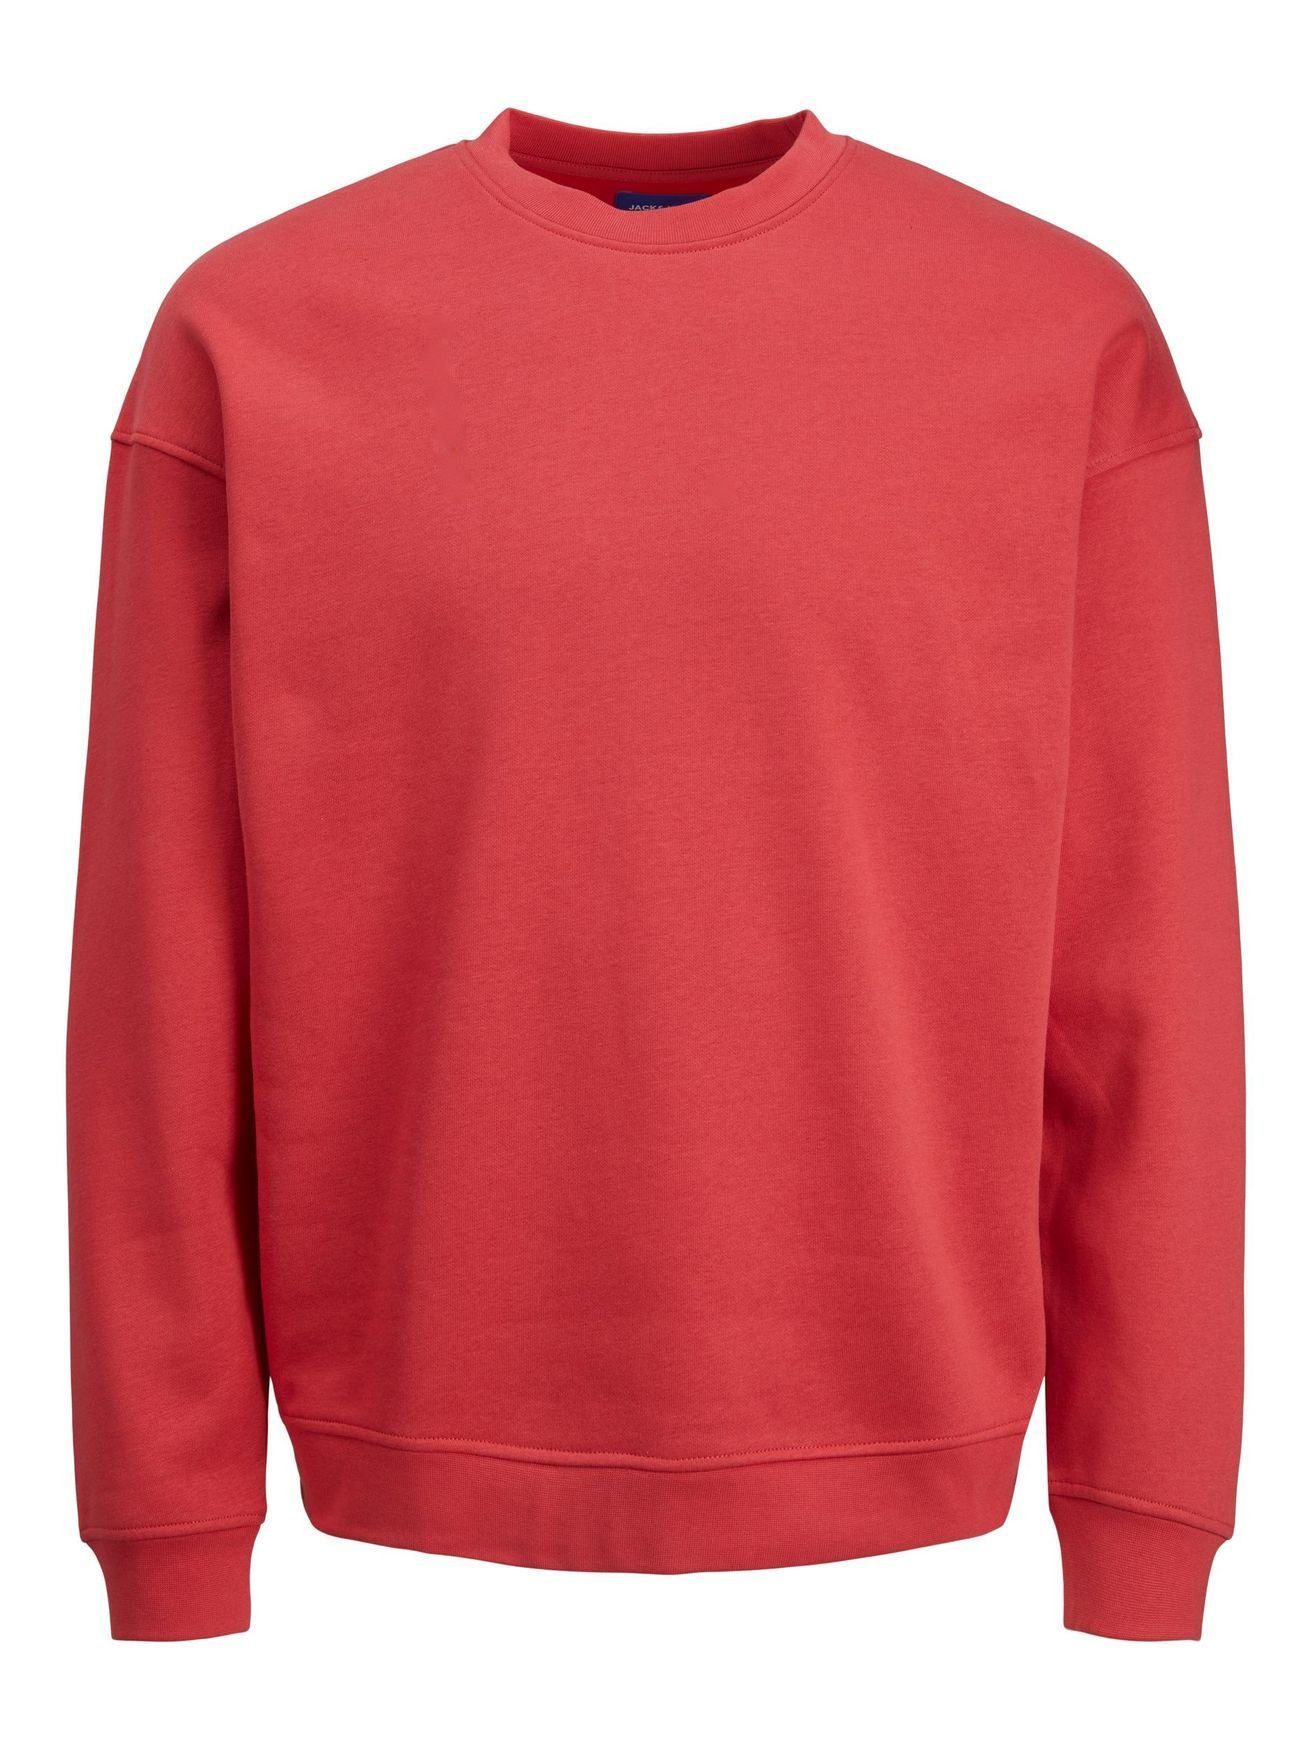 Jack & Jones Sweatshirt Basic Sweater Plus Size Sweatshirt Übergröße Pullover JJEBASIC 4521 in Rot